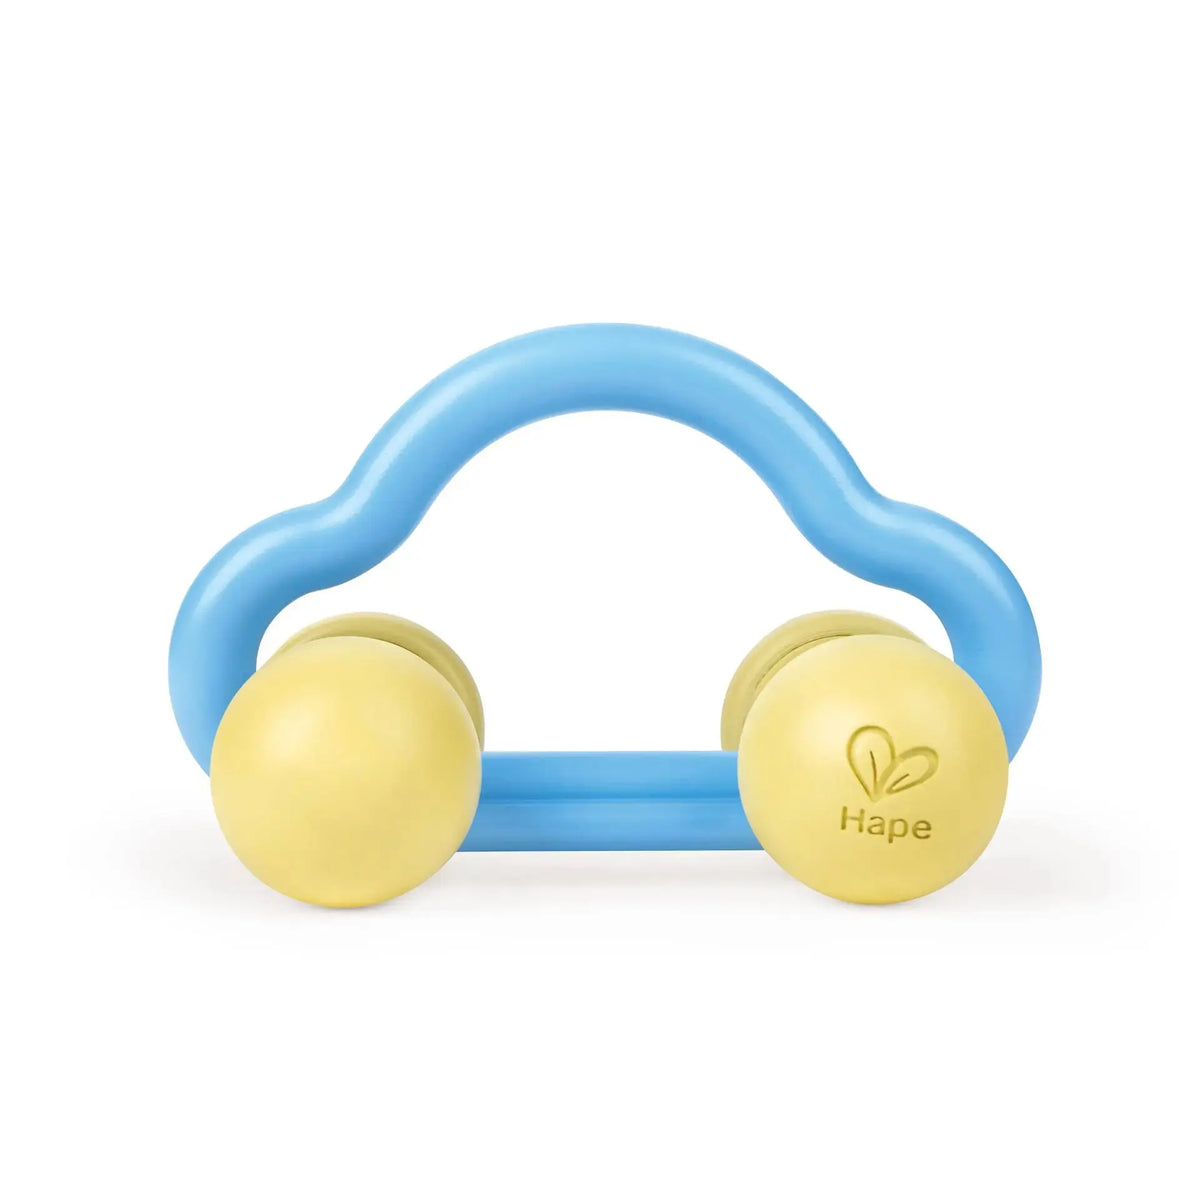 Hape Rattle & Roll Toy Car For Teething Babies - Hape Toys (Hape